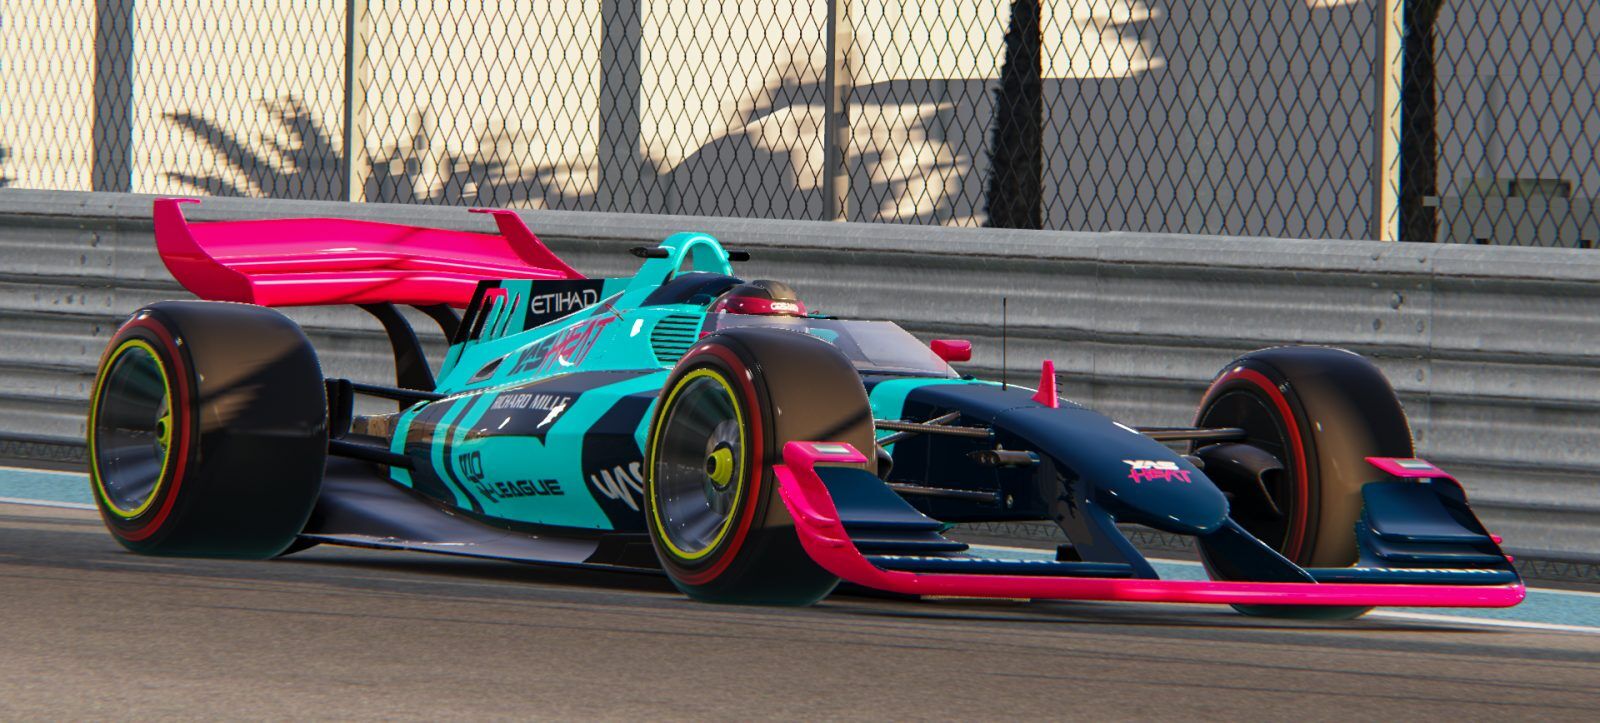 Futuristic looking Formula car in a YAS HEAT livery.